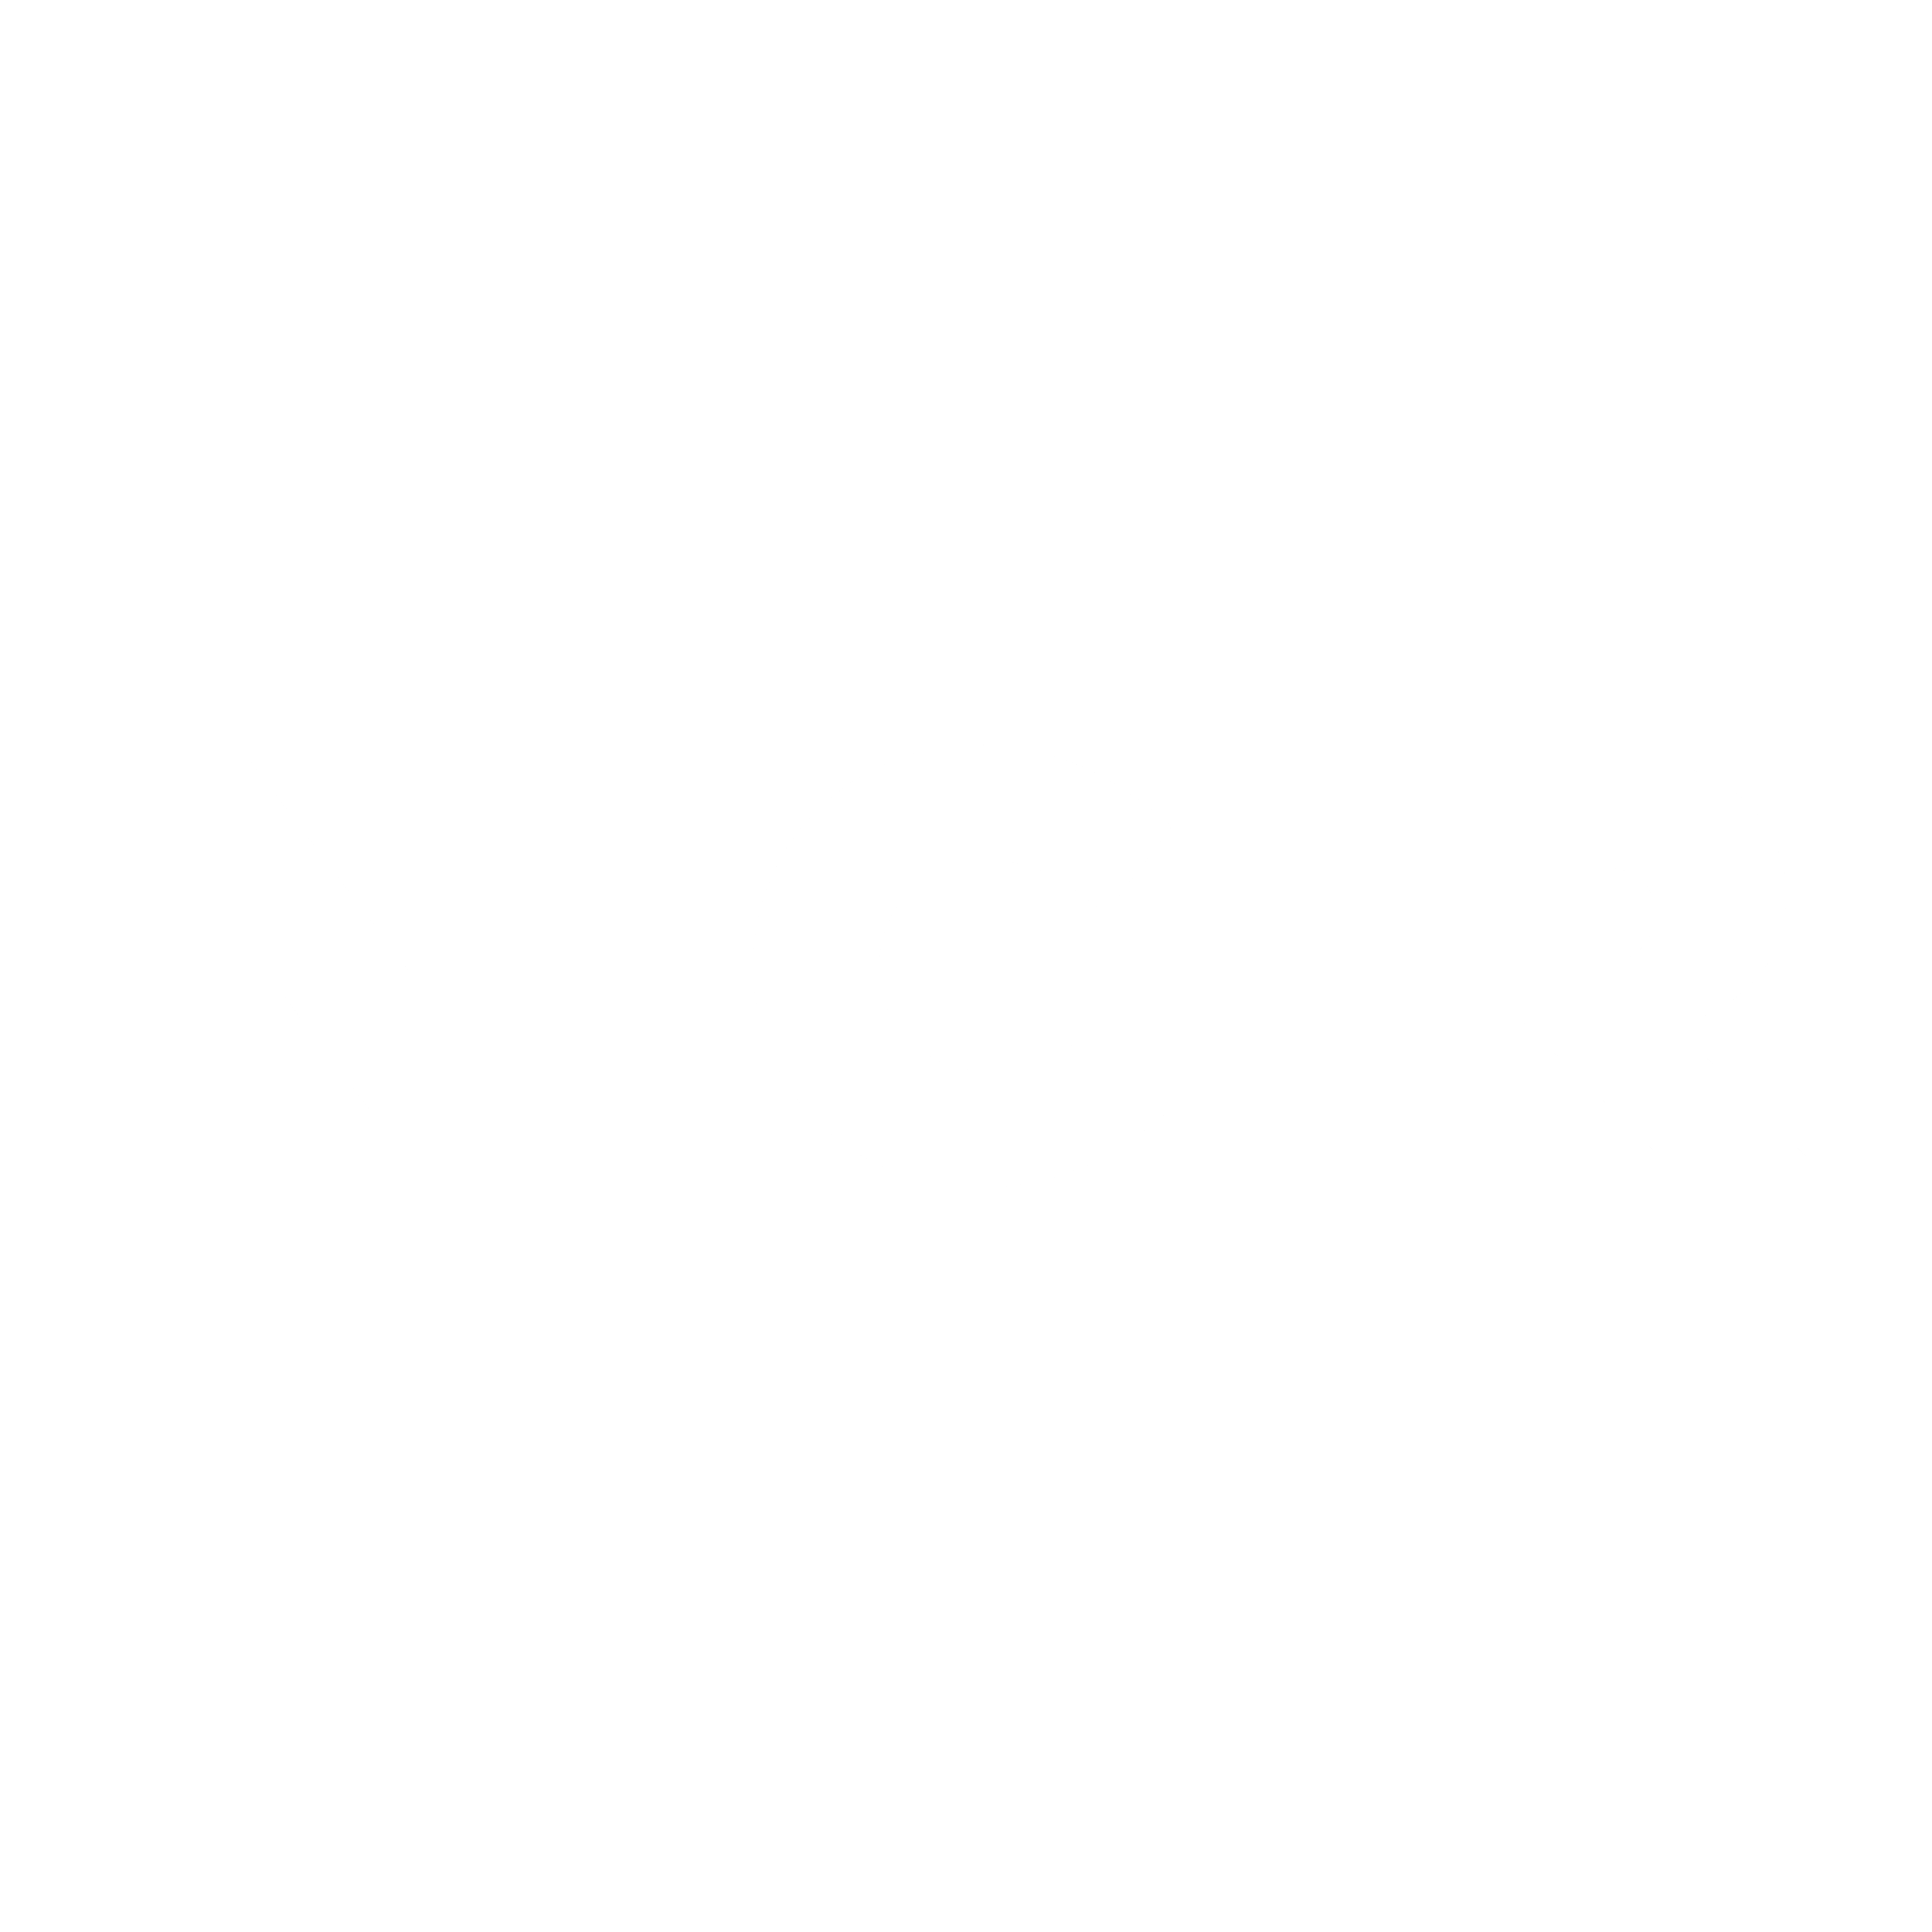 NCR Logo - NCR Logo PNG Transparent & SVG Vector - Freebie Supply